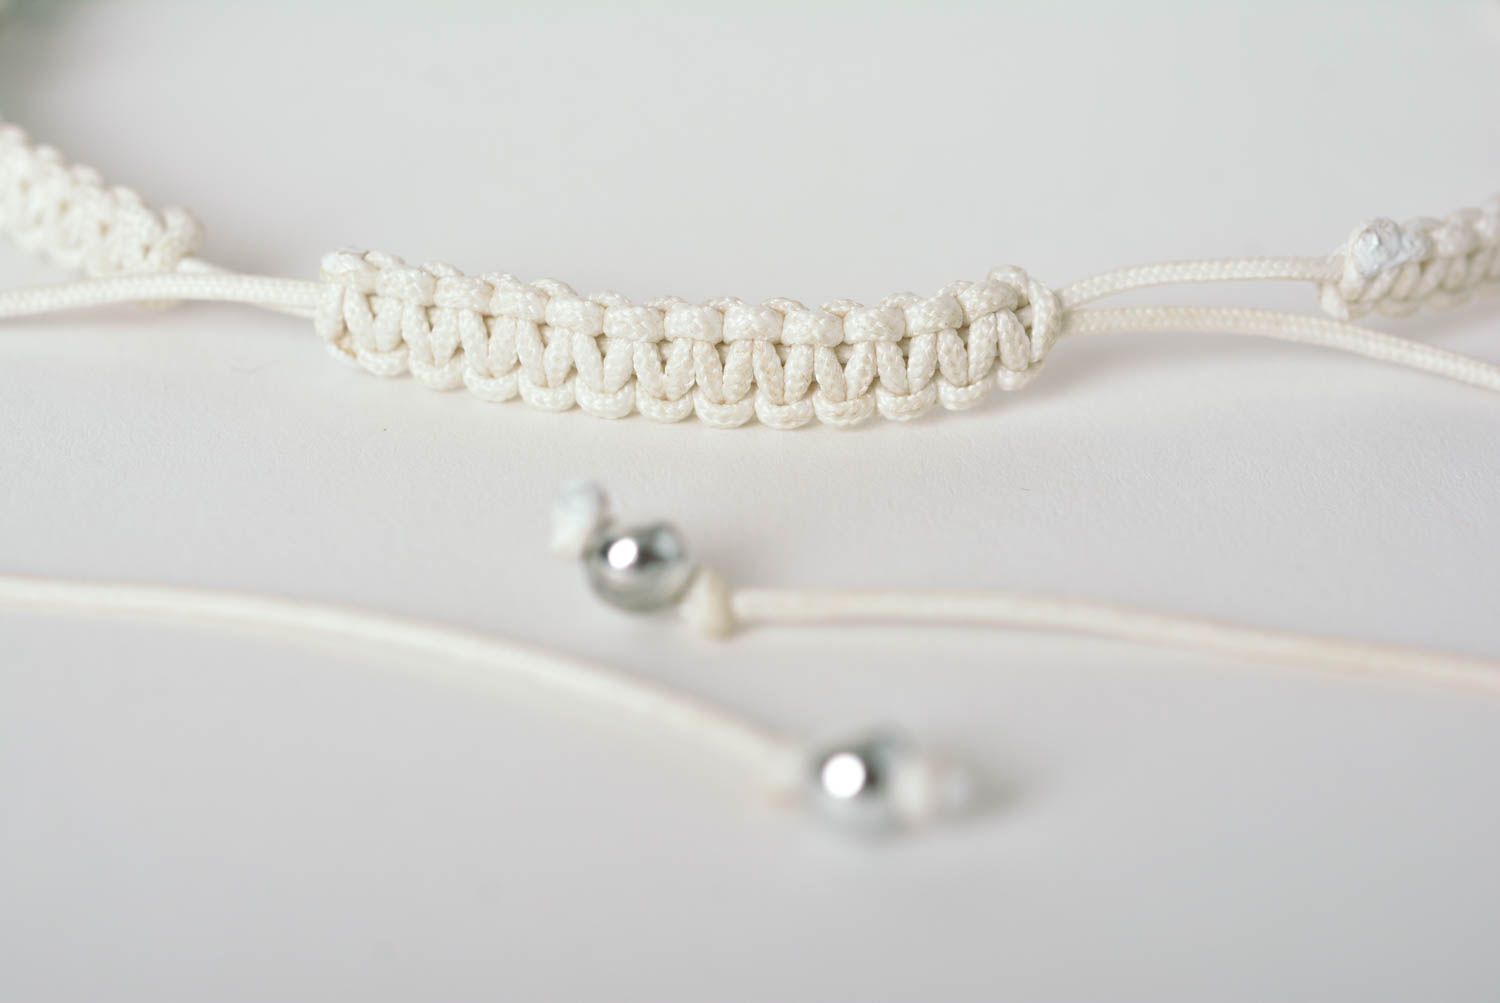 Spike necklace handmade necklace macrame necklace handmade thread jewelry  photo 4